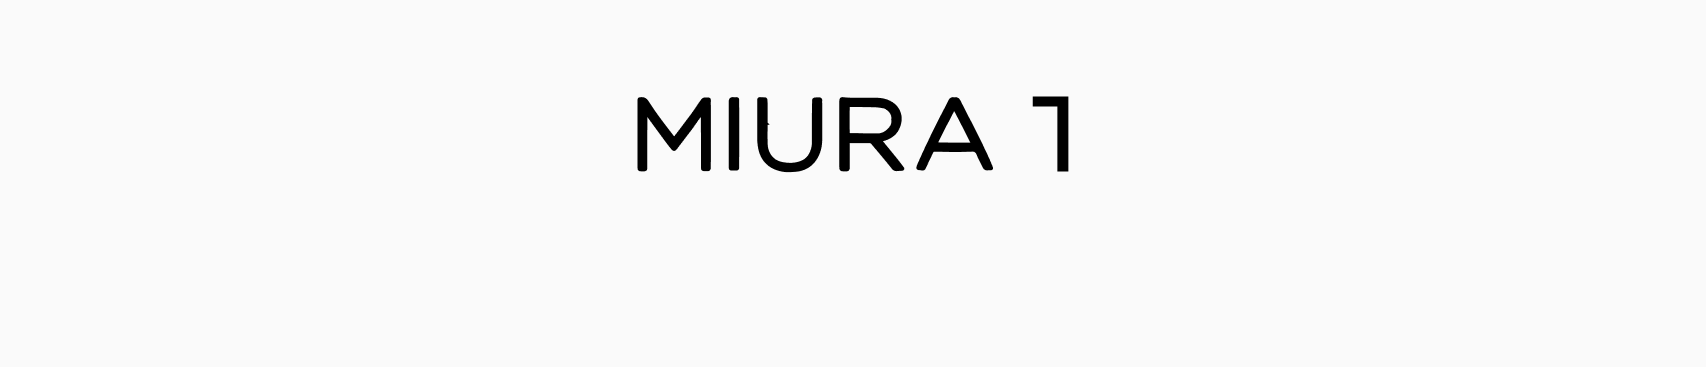 Nombre del cohete, Miura 1